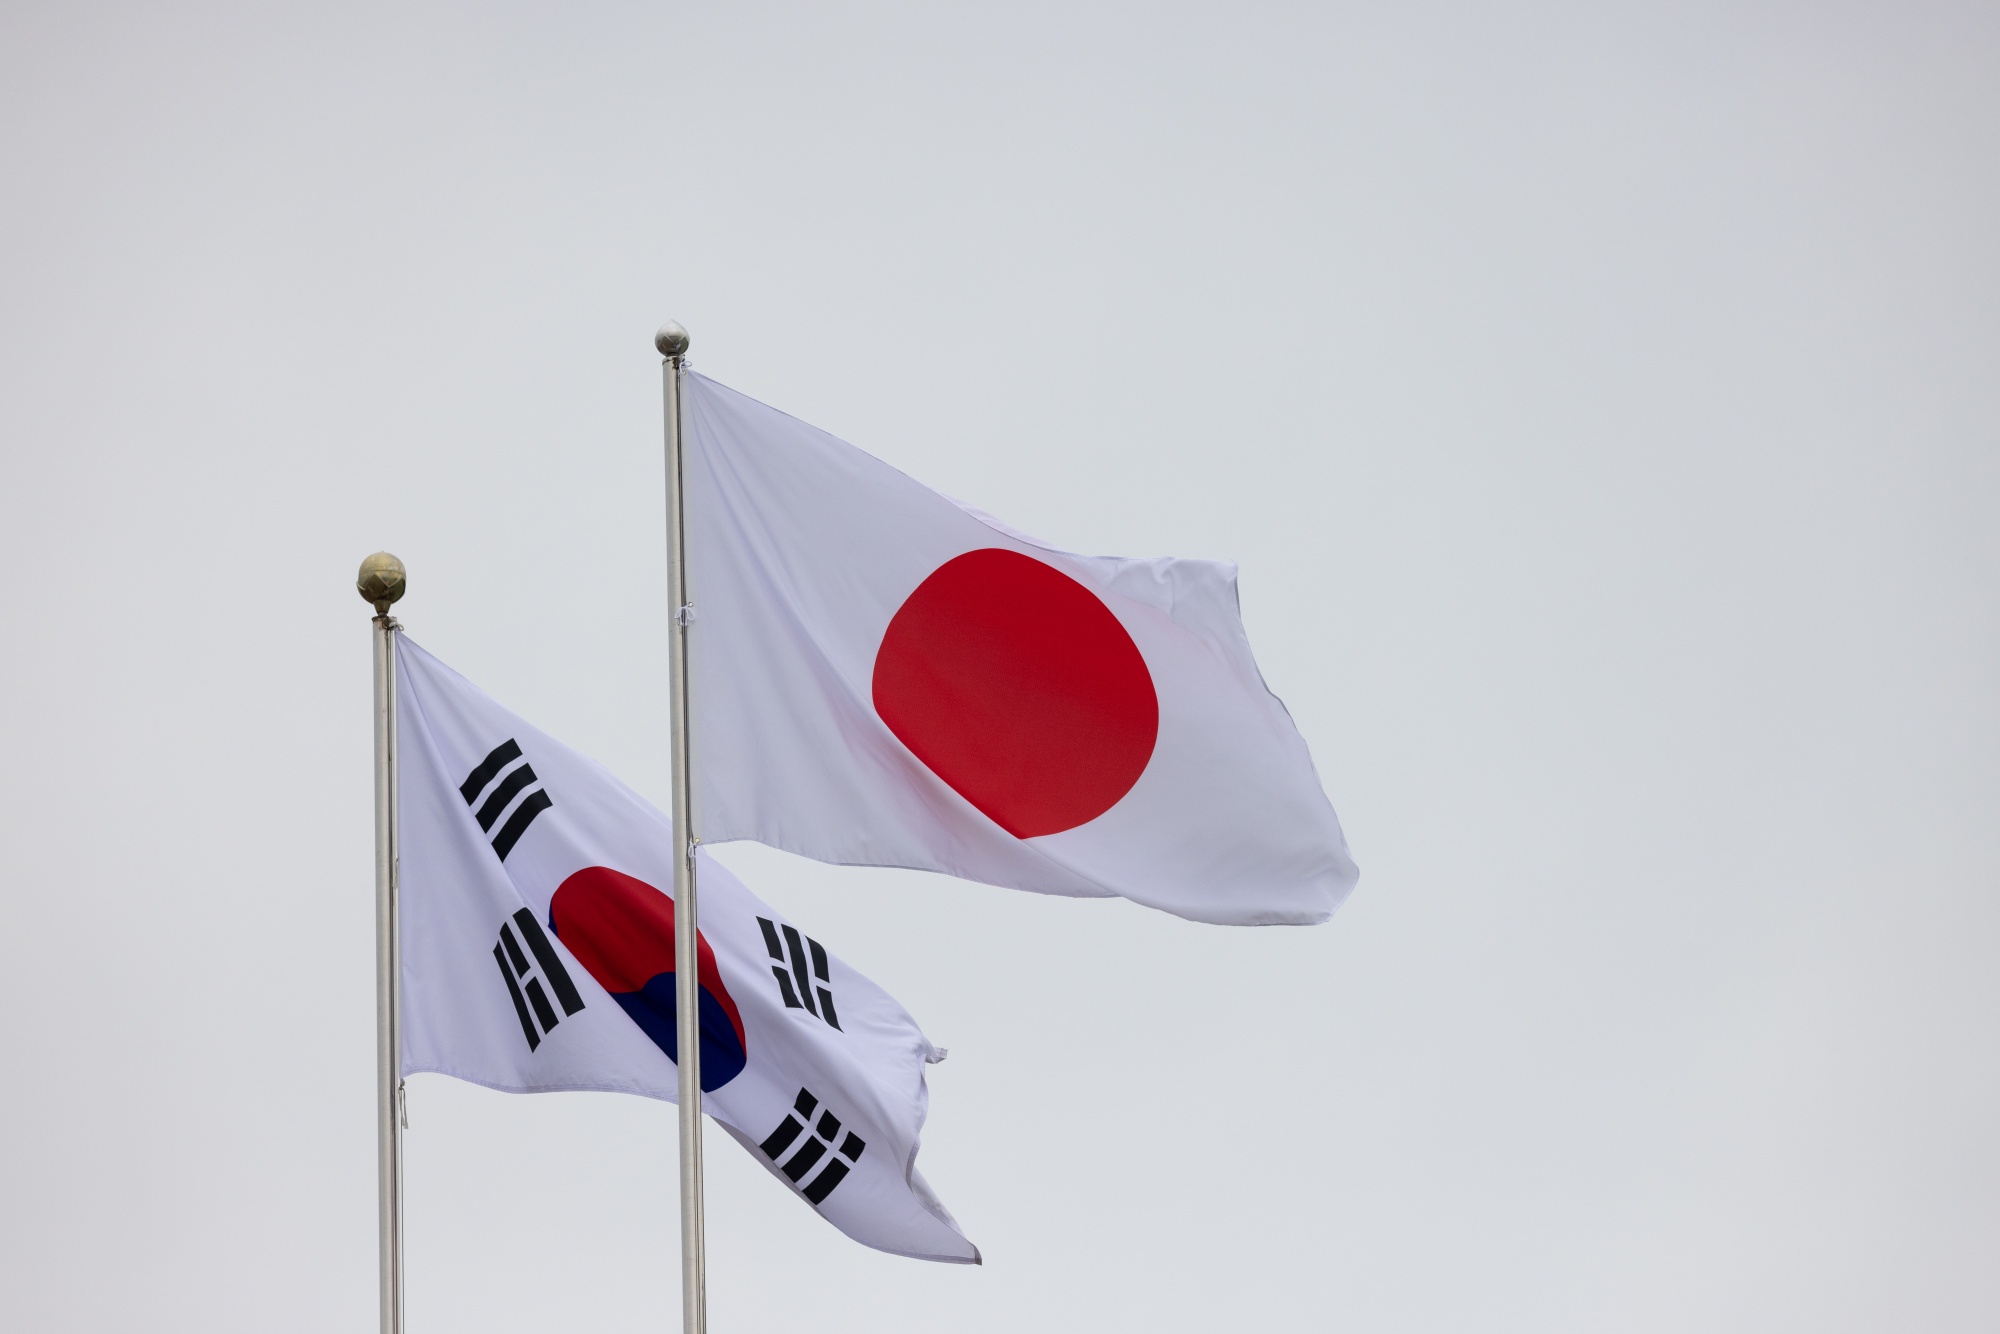 Shinhan Financial, KOSME to support startups for expanding Japanese market  - KED Global